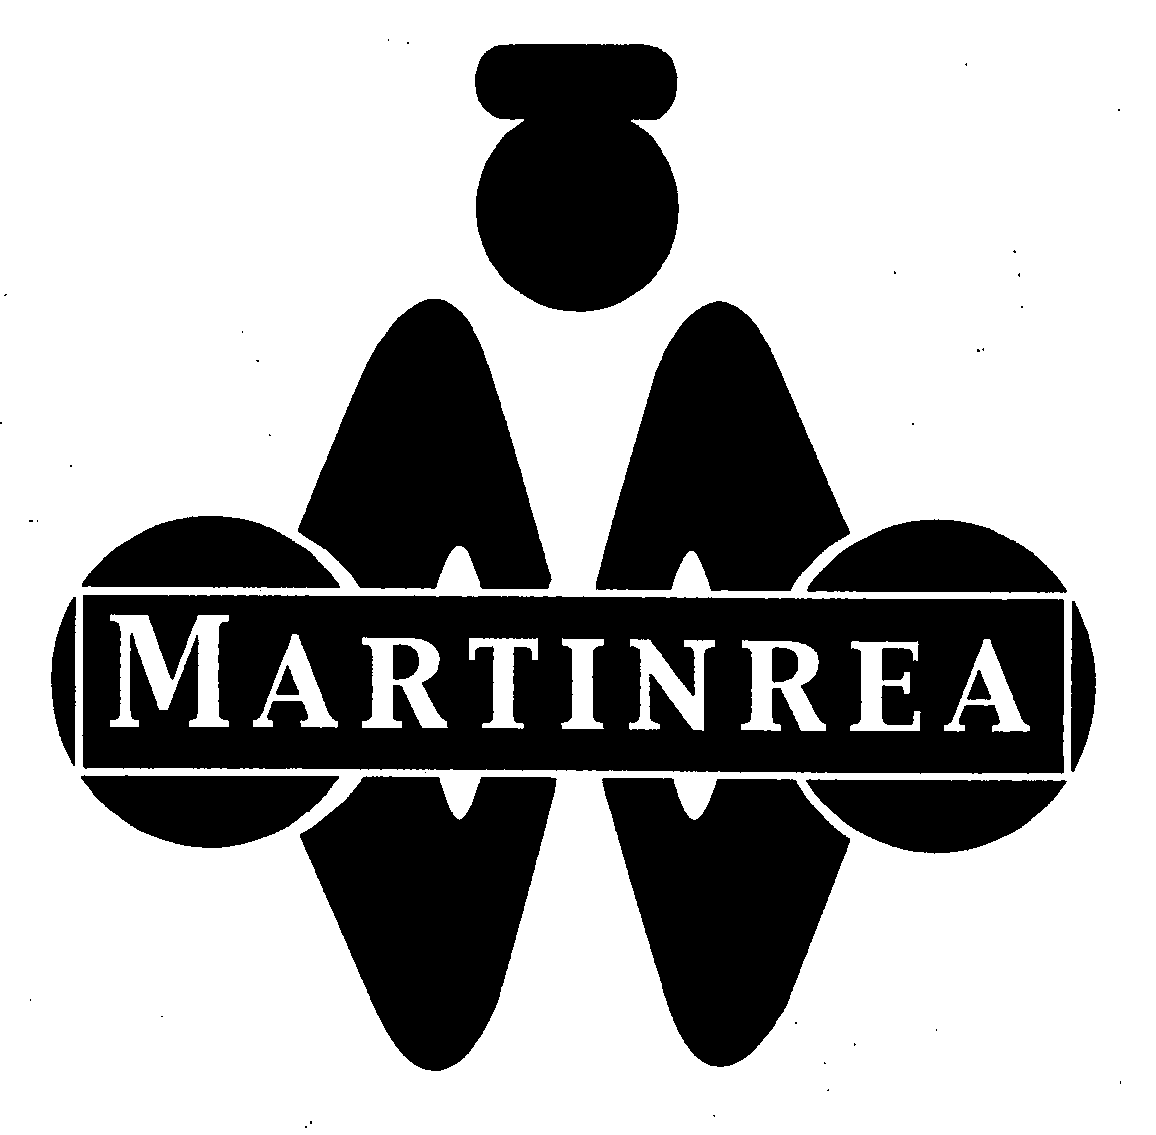 MARTINREA